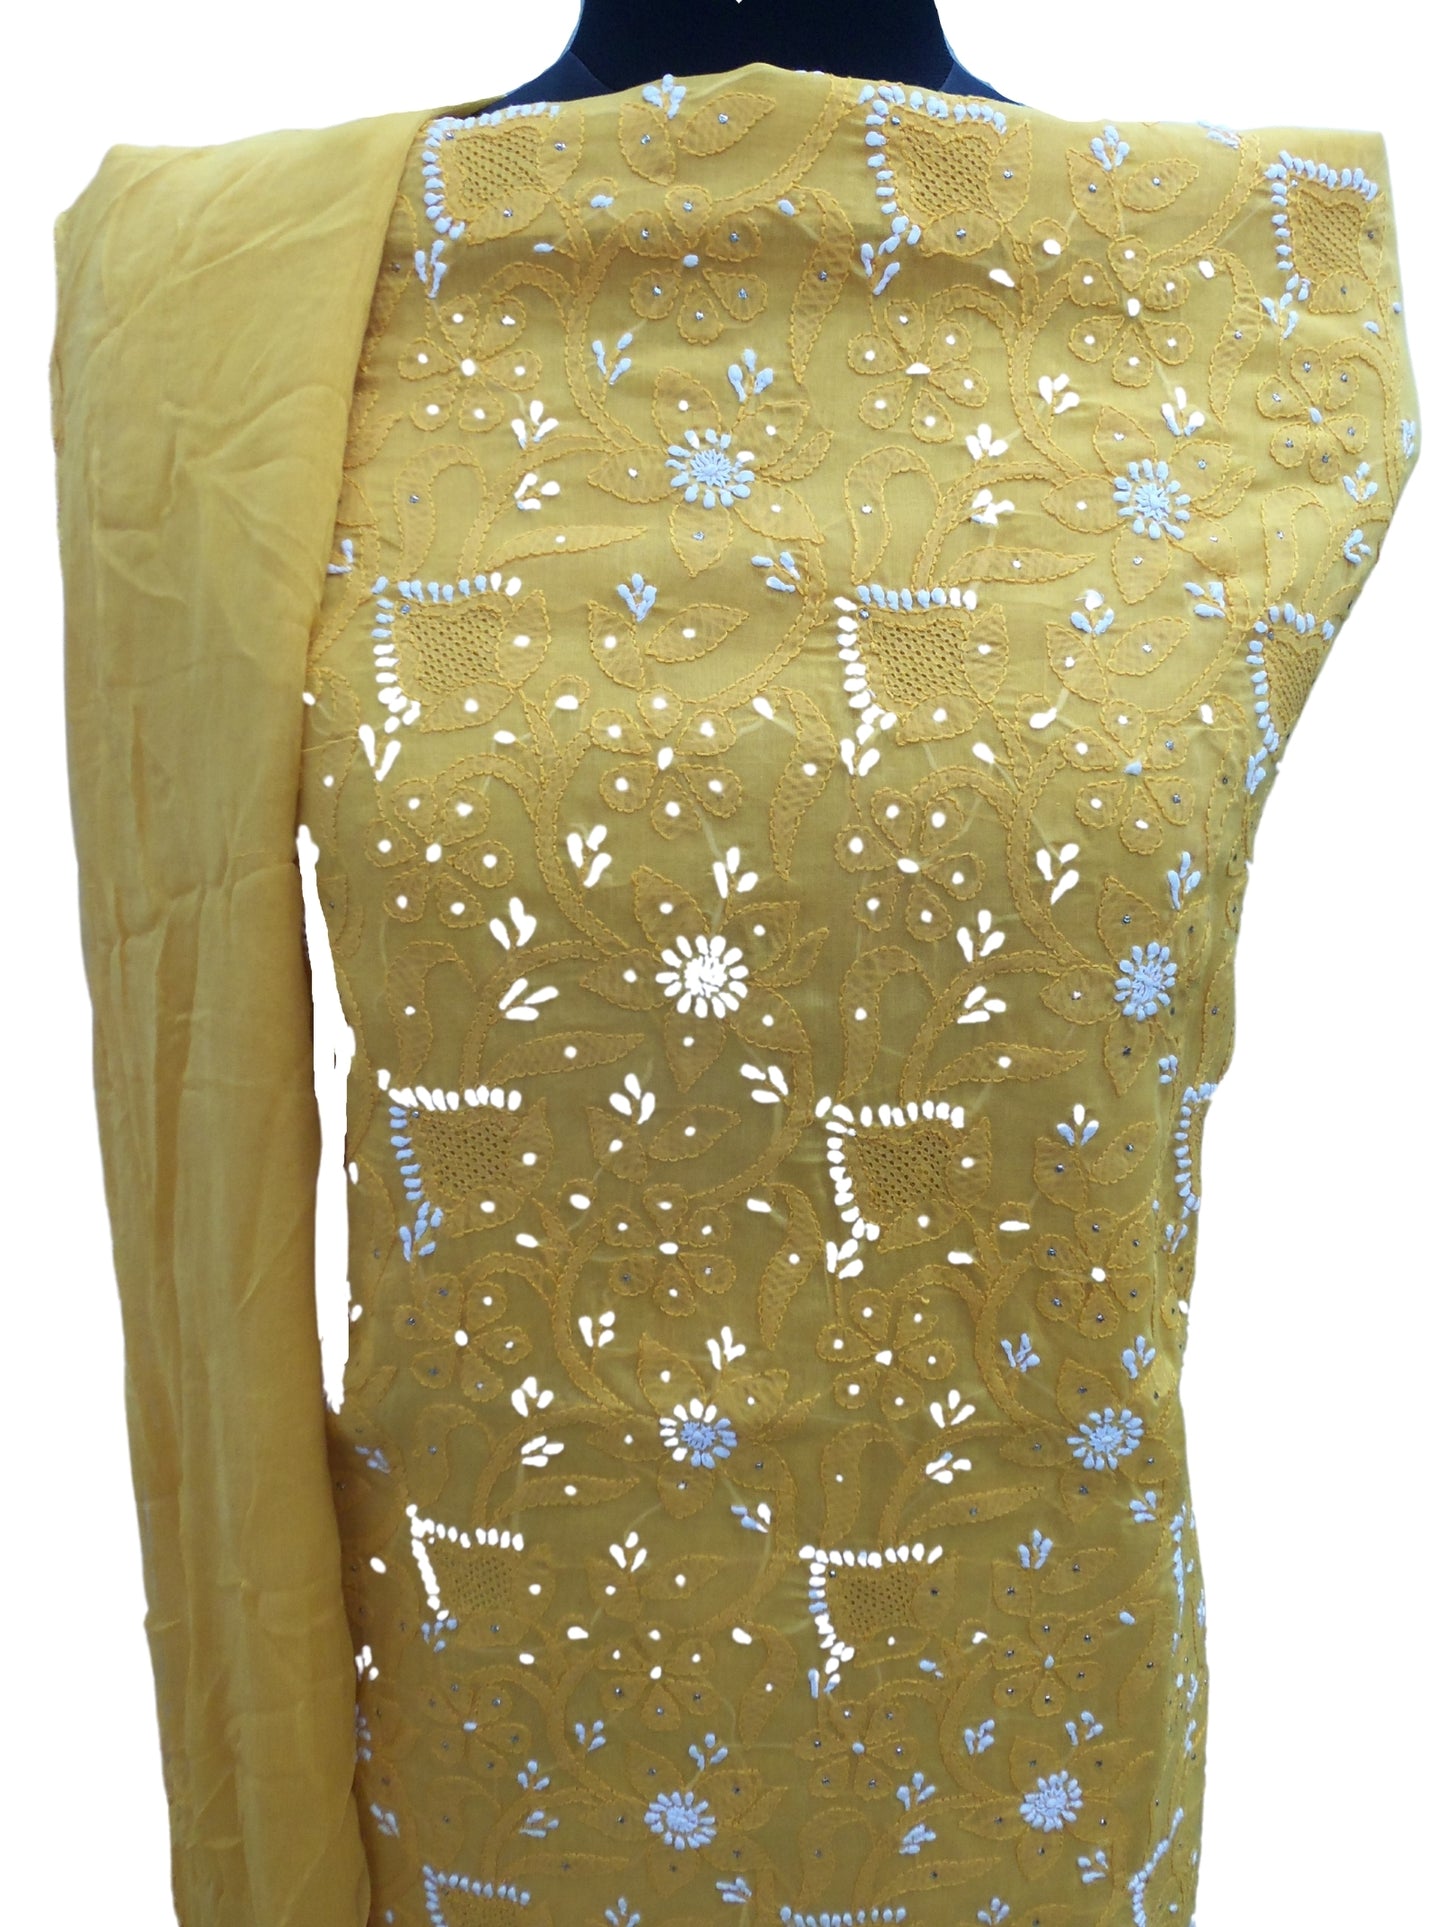 Shyamal Chikan Hand Embroidered Mustard Yellow Cotton Lucknowi Chikankari Unstitched Suit Piece With Mukaish Work - S707 - Shyamal Chikan